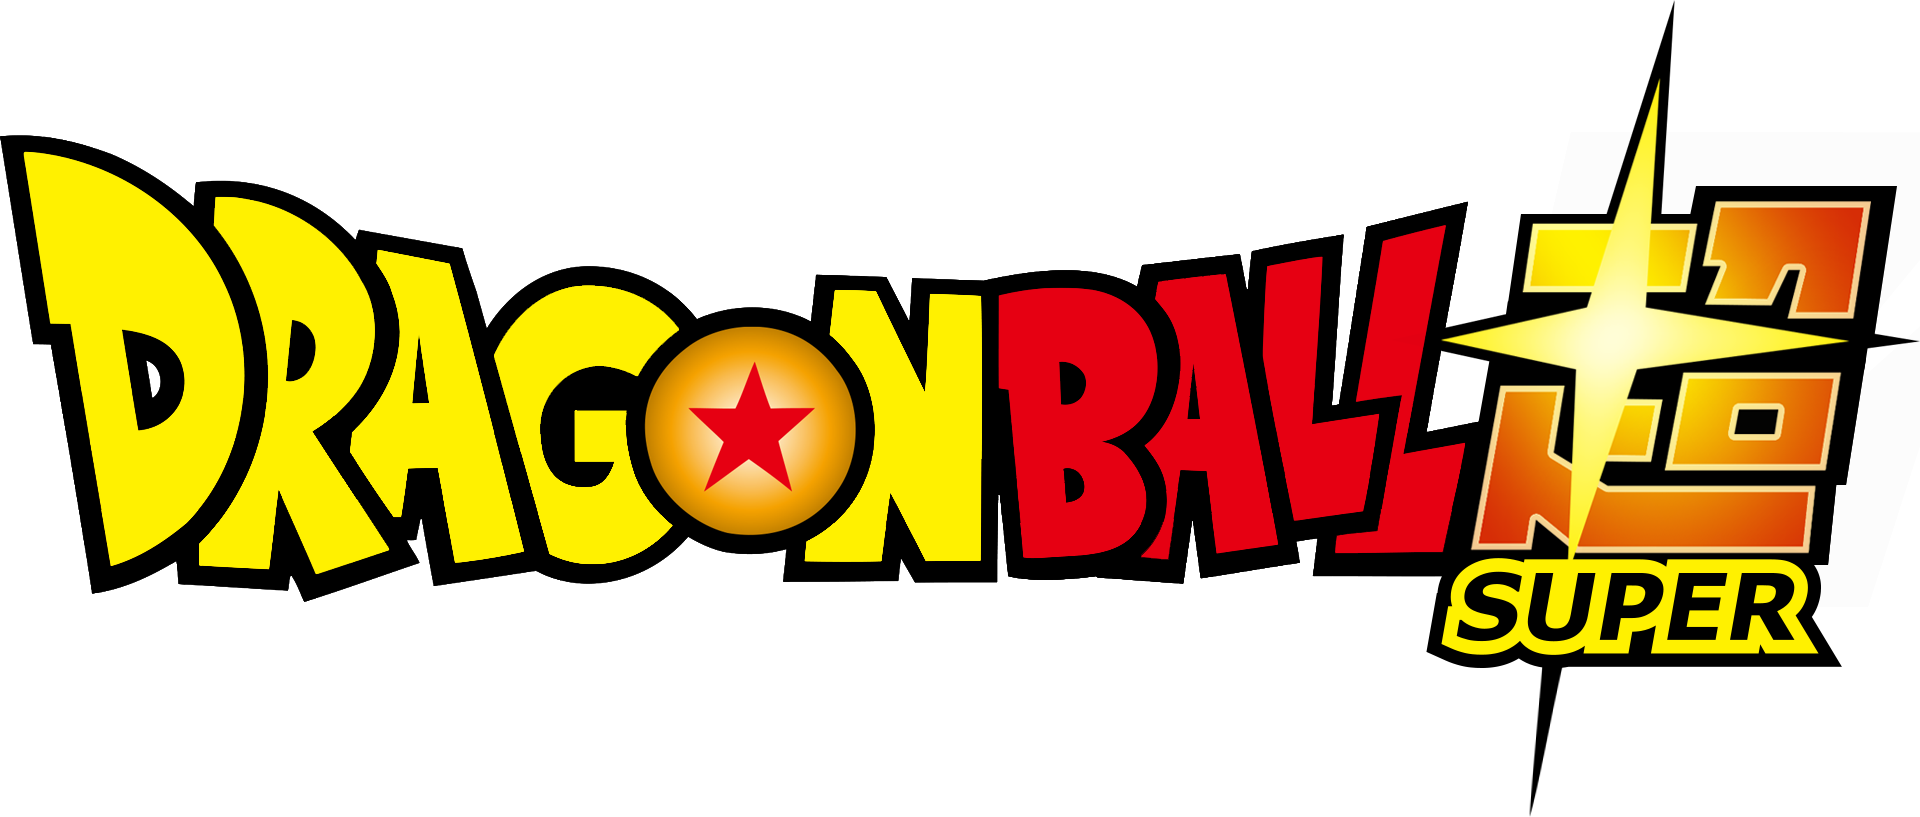 Dbslogo - Dragonball Super Logo Png (1920x817), Png Download